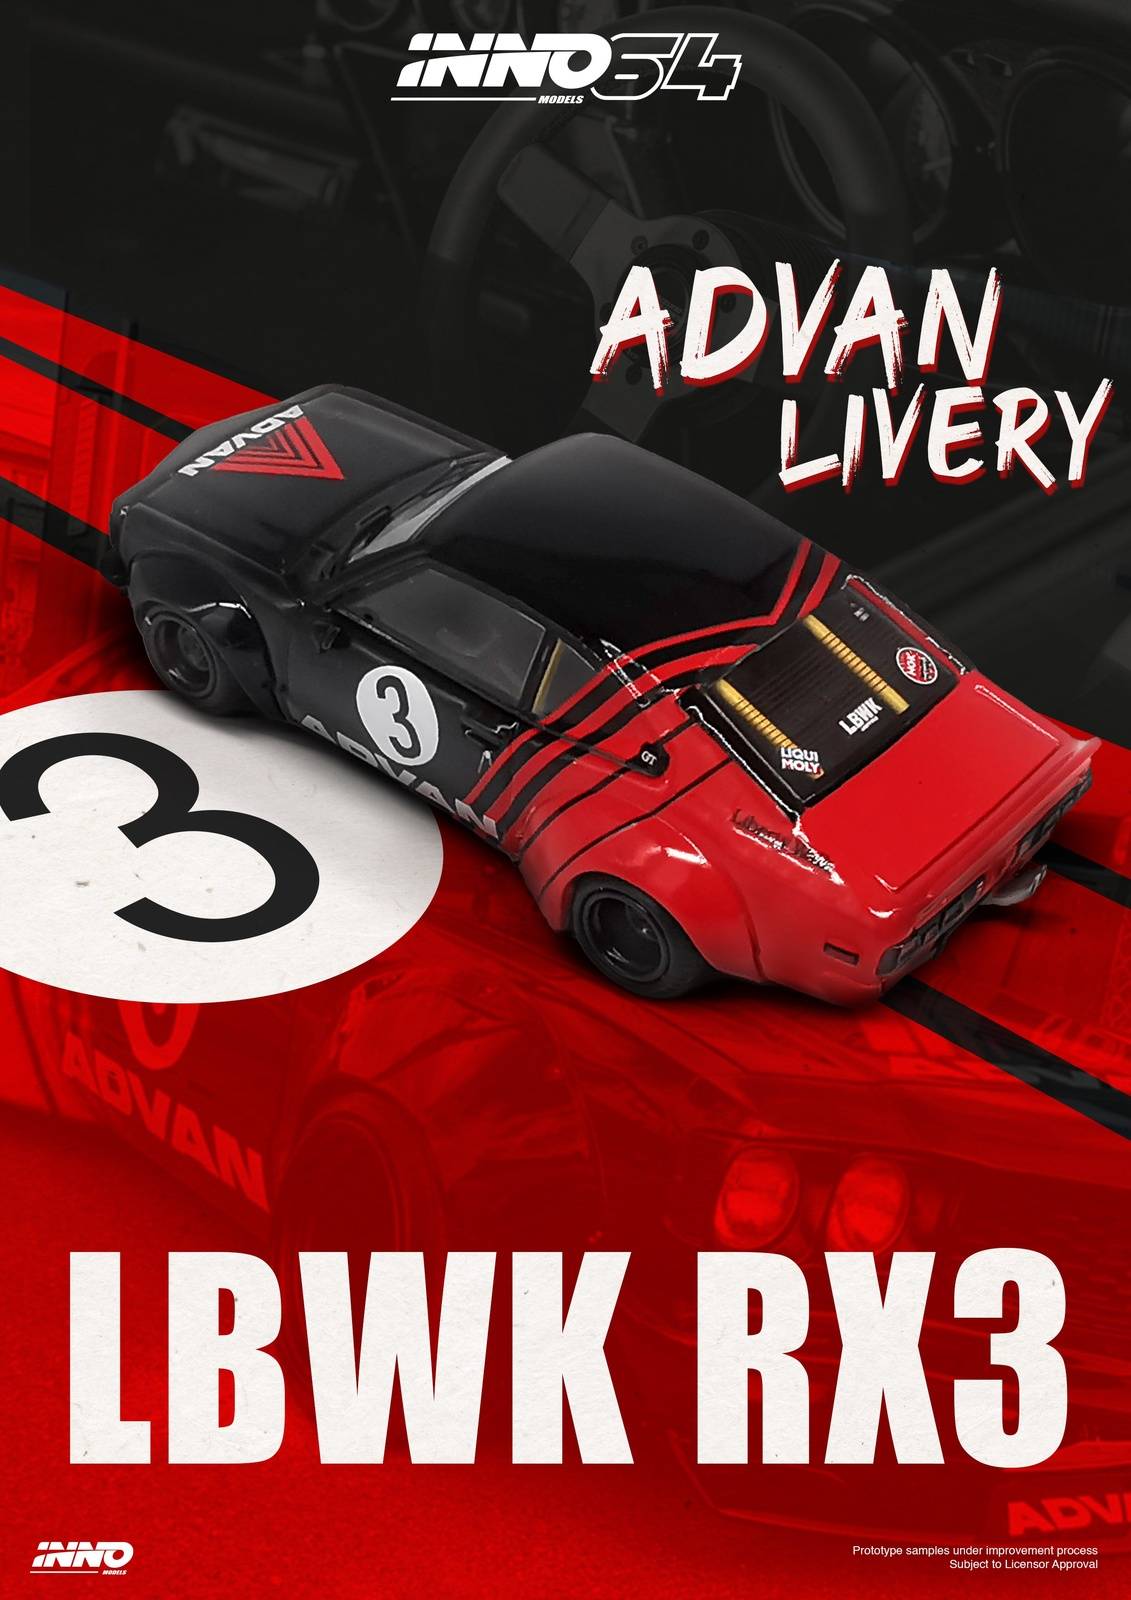 PRE-ORDER INNO64 1:64 LBWK Mazda RX3 Savanna Advan Livery